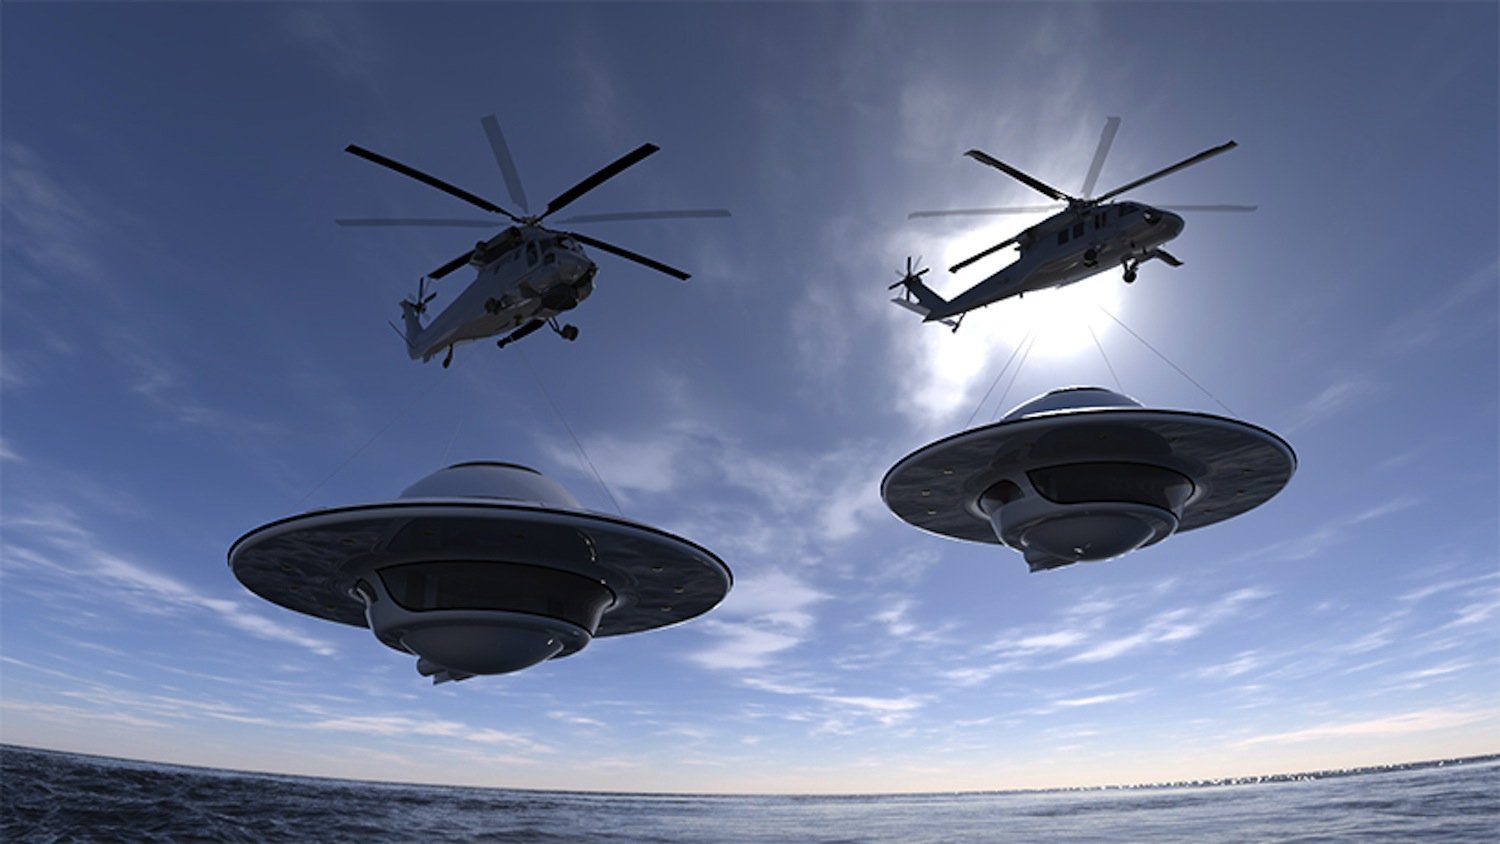 Die Auslieferung des Hausboots erfolgt per Helikopter. Allerdings frühestens Anfang 2018. 